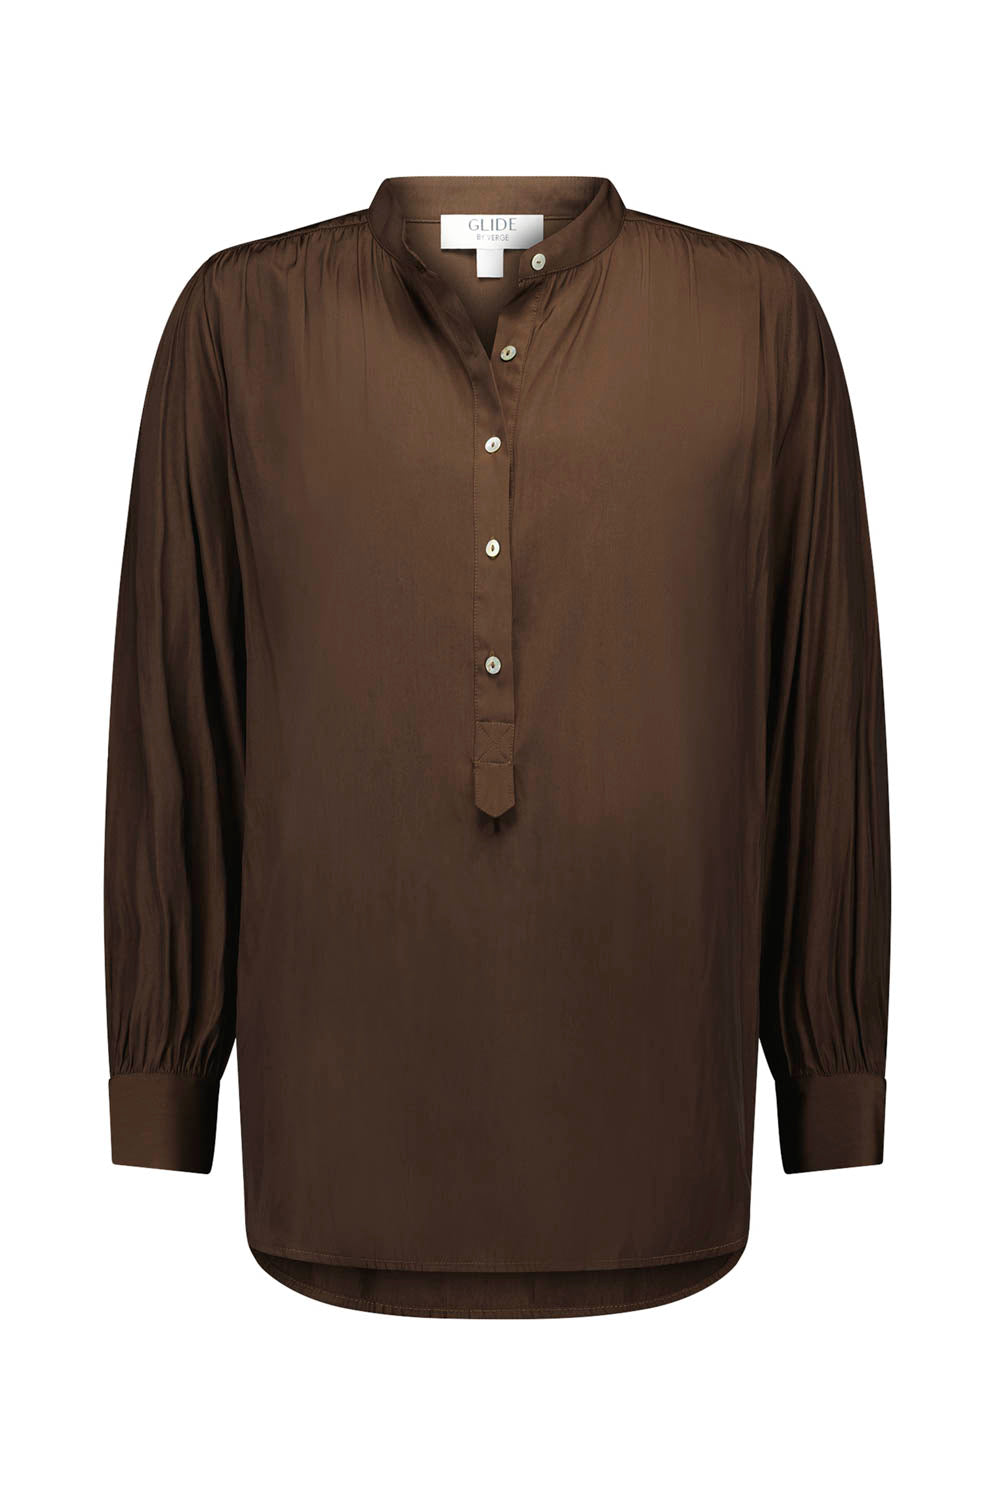 Glide by Verge - Seattle Shirt - Chocolate - Shirt VERGE